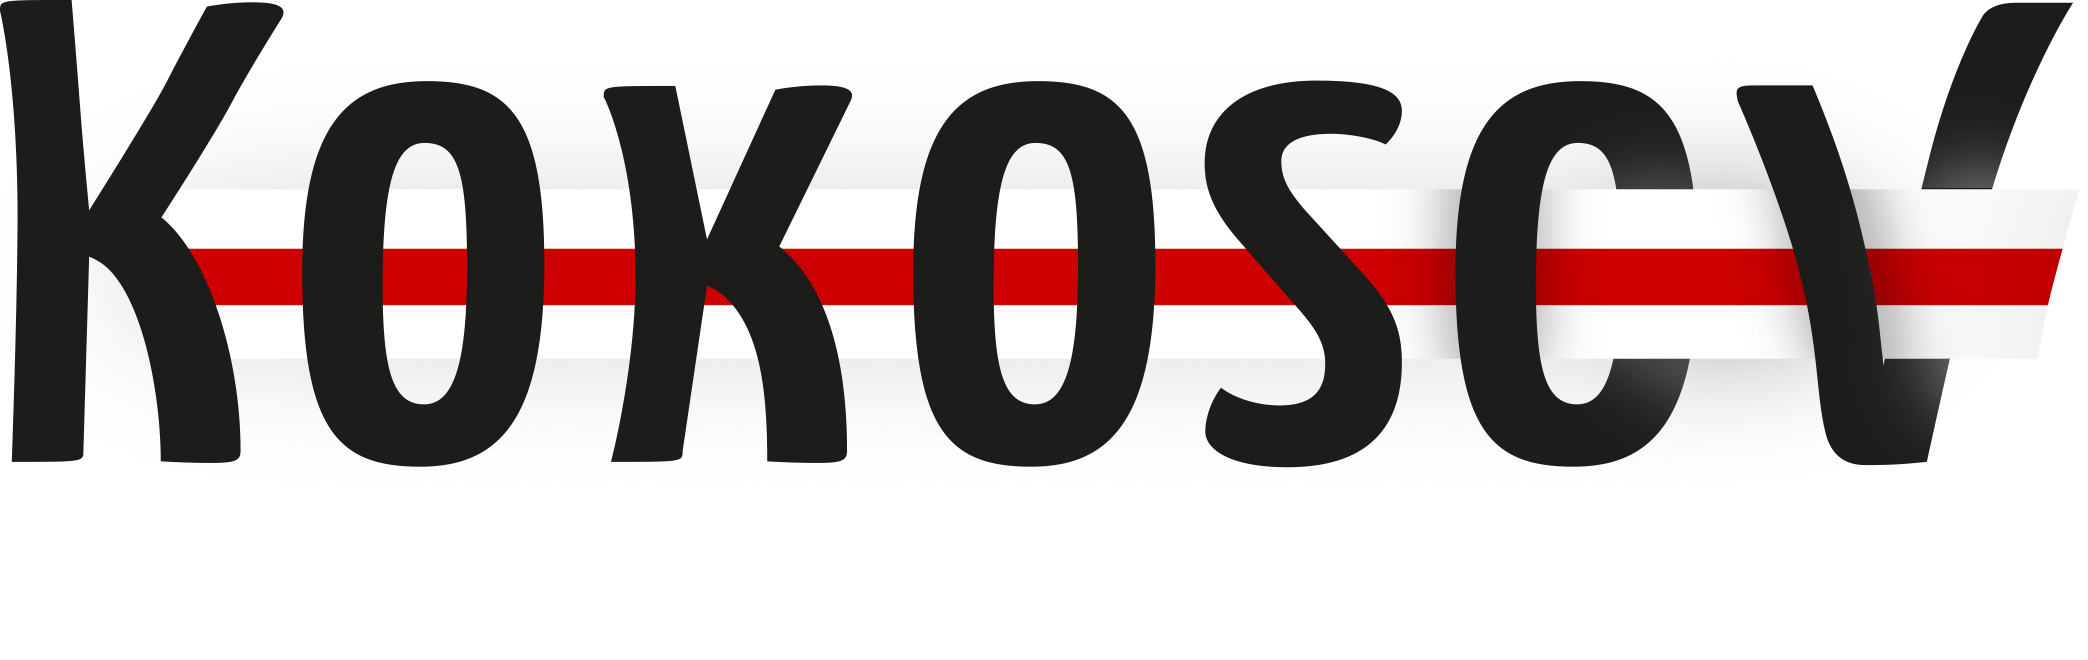 KOKOSOV - Город Томск logo — копия.png